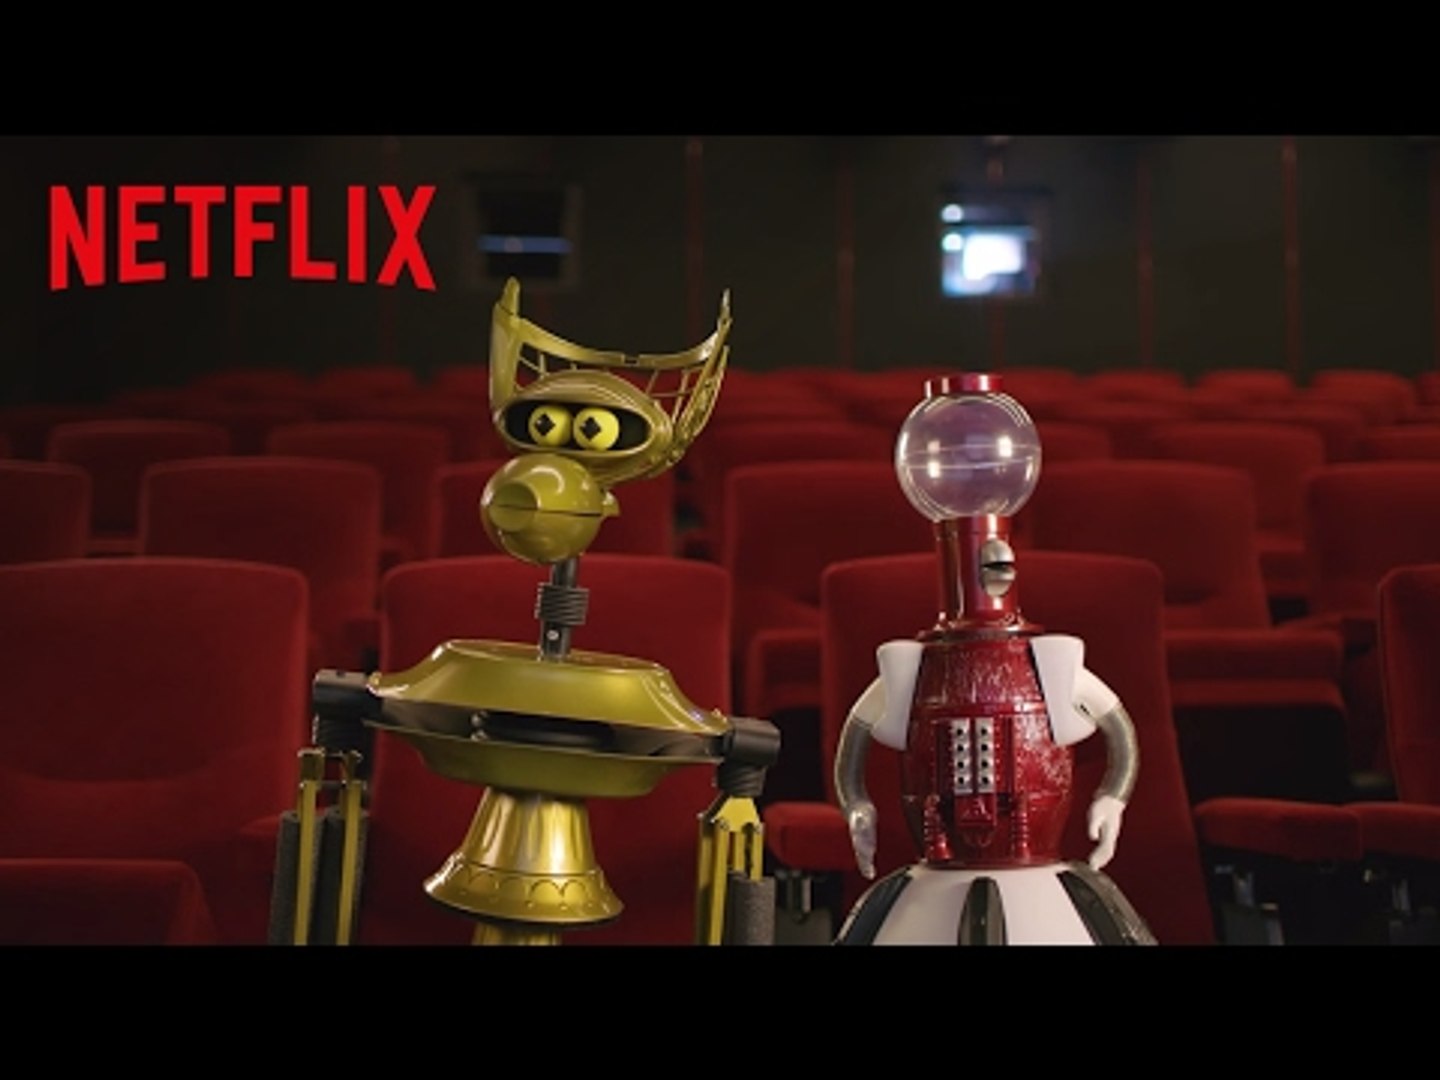 MST3K | Tom Servo & Crow Watch Netflix [HD] | Netflix